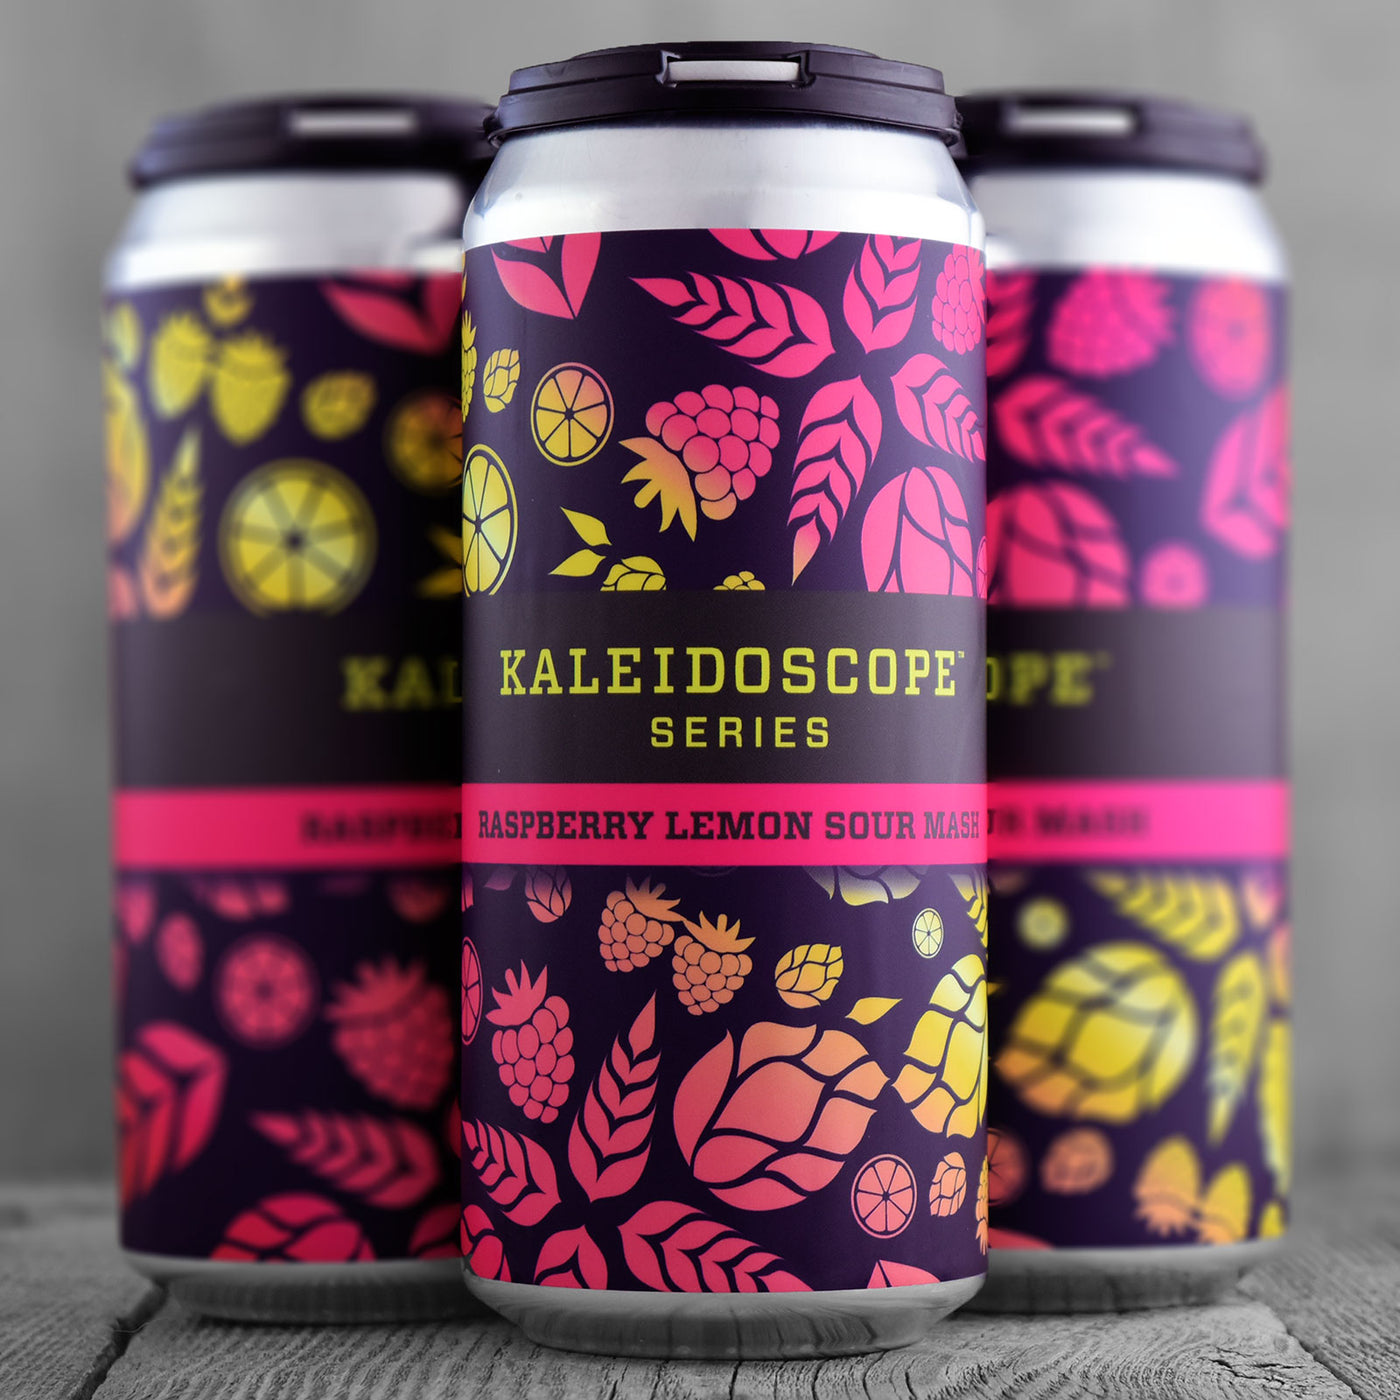 Devil's Canyon Kaleidoscope Series: Raspberry Lemon Sour Mash